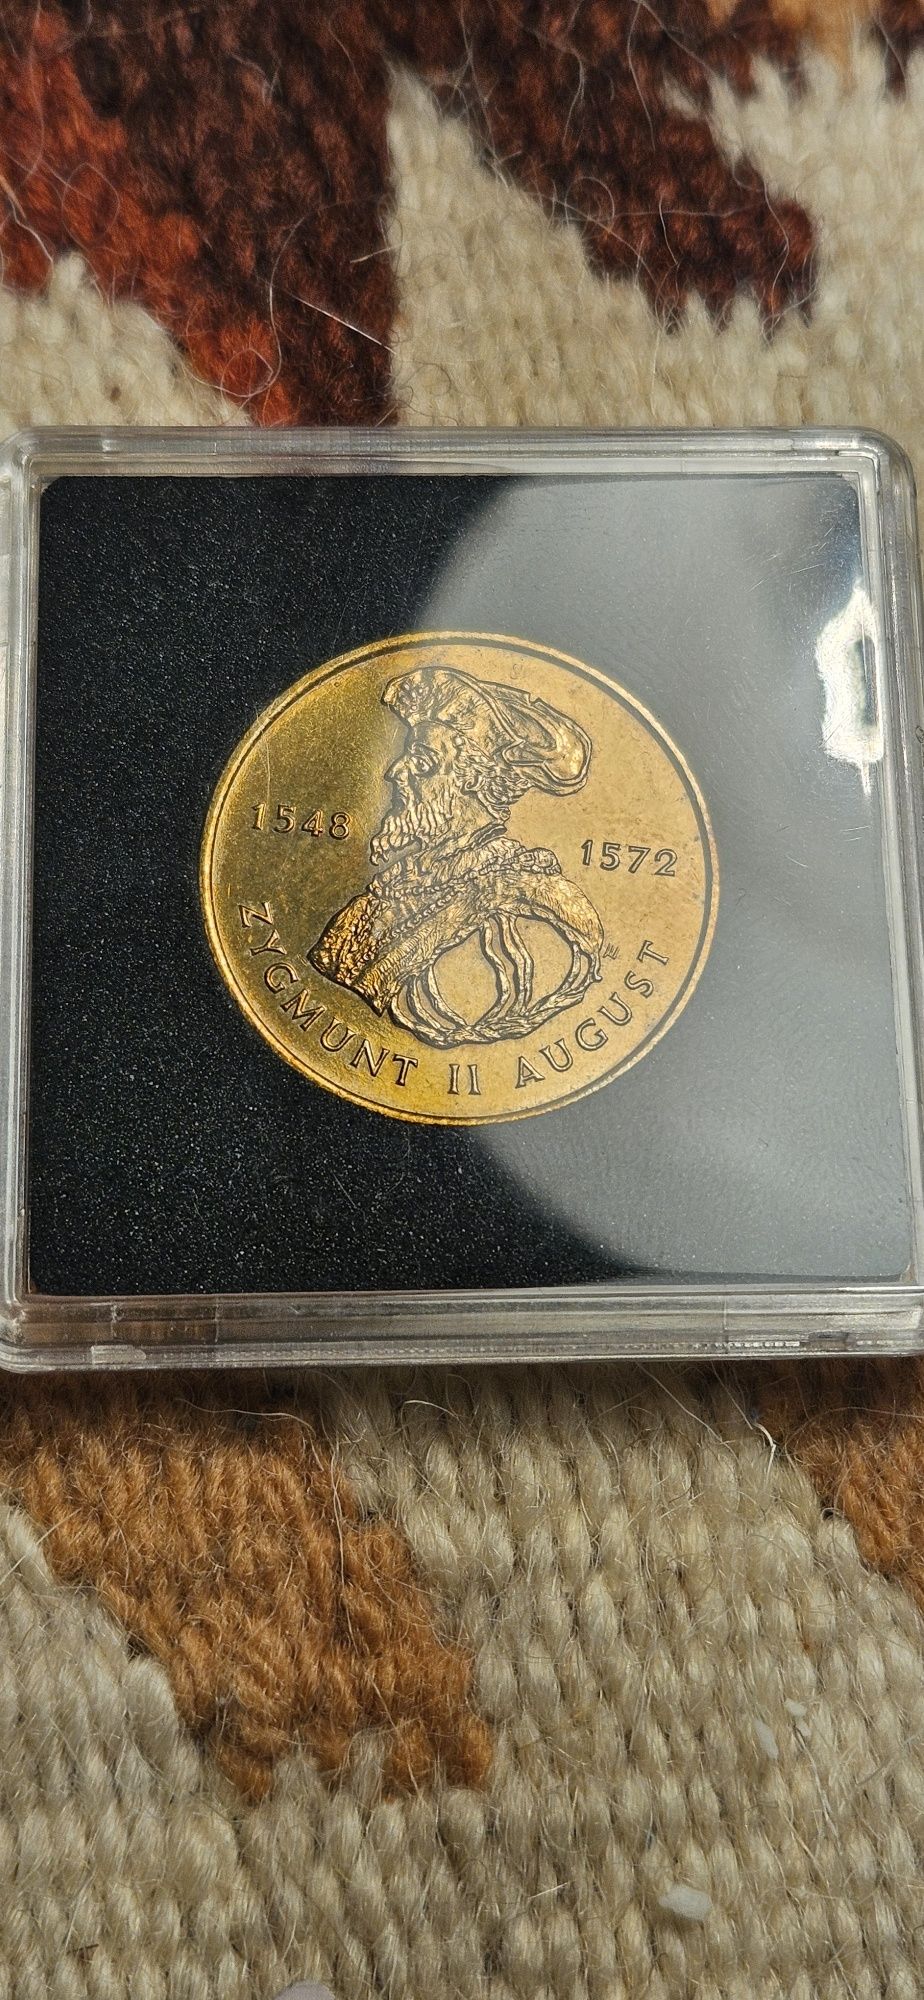 Moneta 2 zł Nordic Gold Zygmunt II August